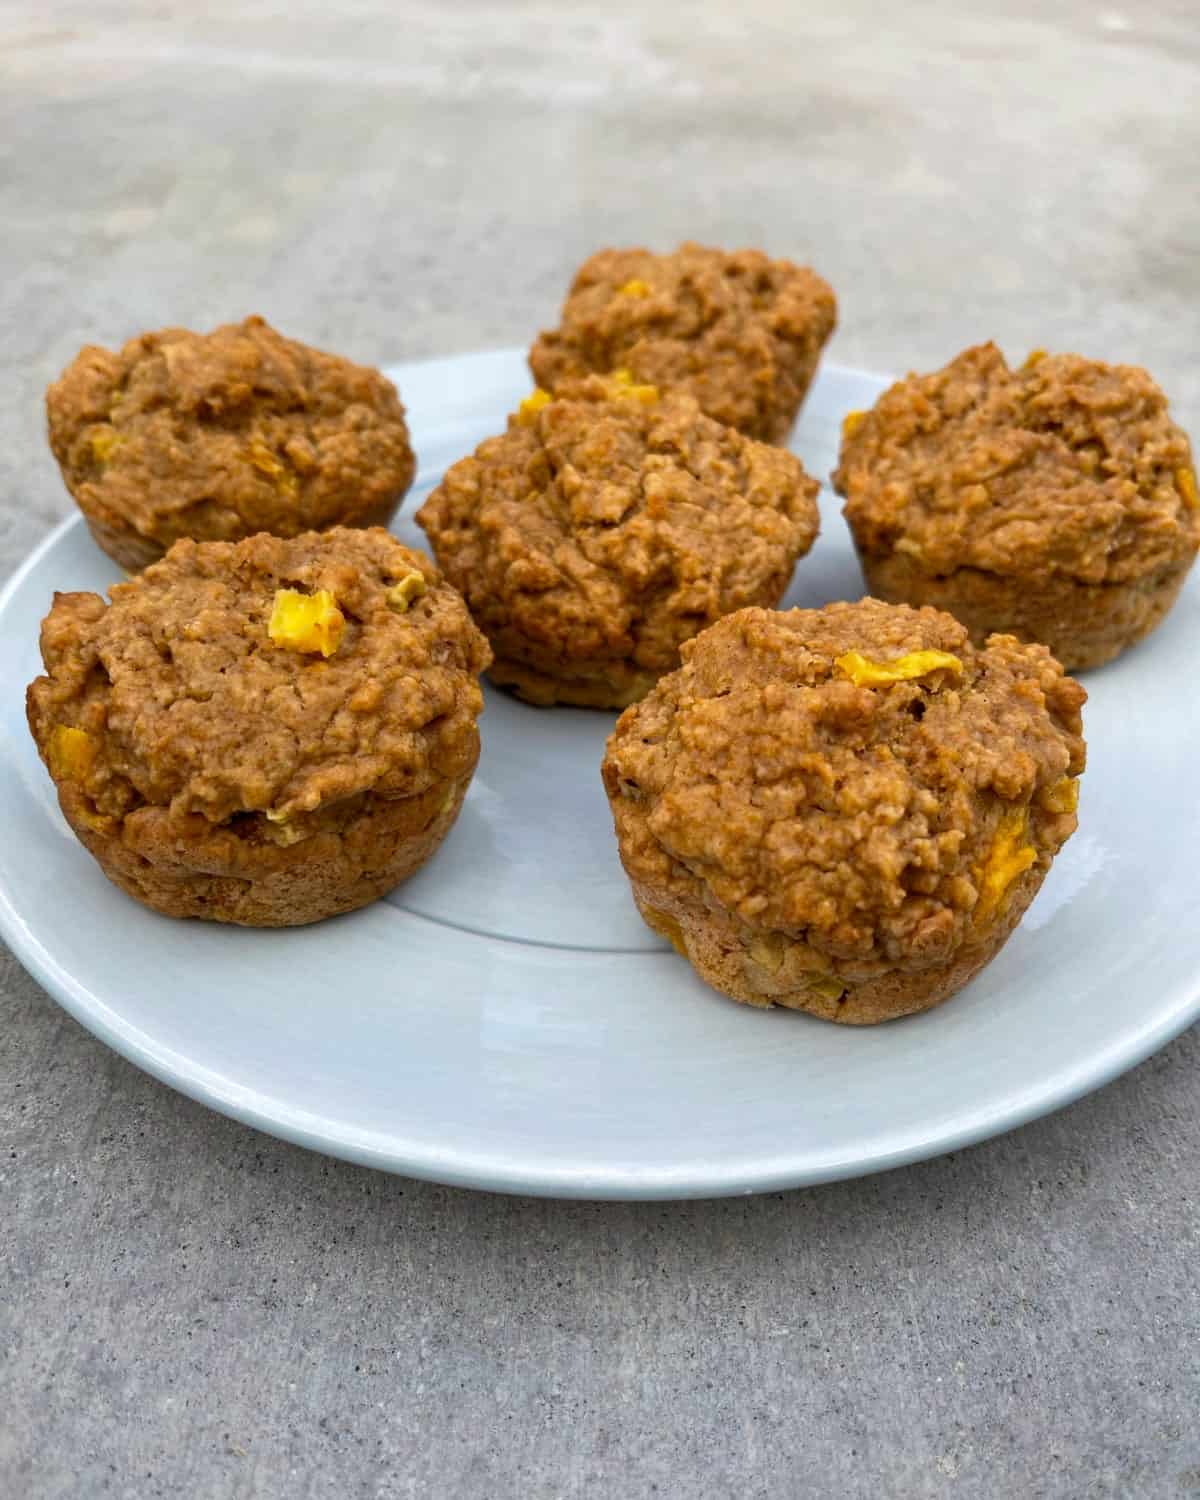 Fiber one mango muffins on blue serving plate.